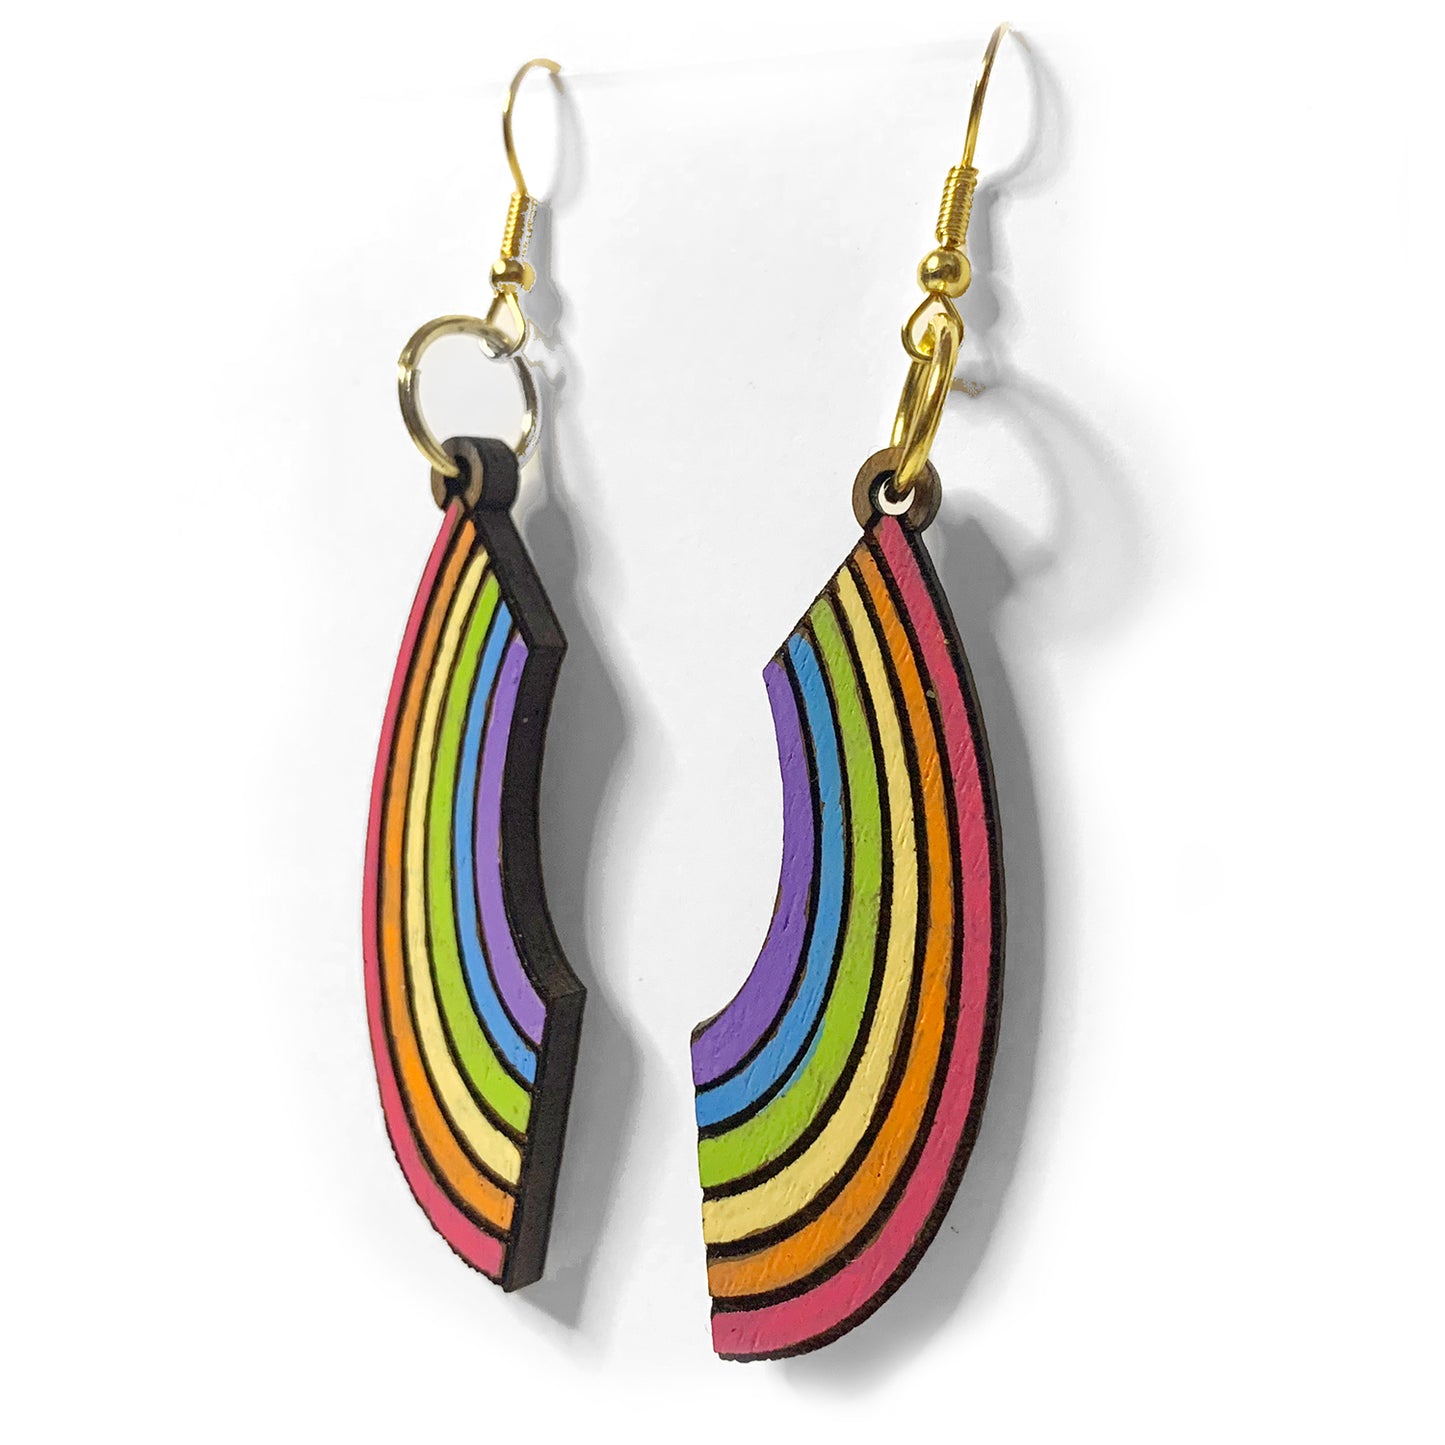 Colorful dangle earrings, geometric statement earrings, pride